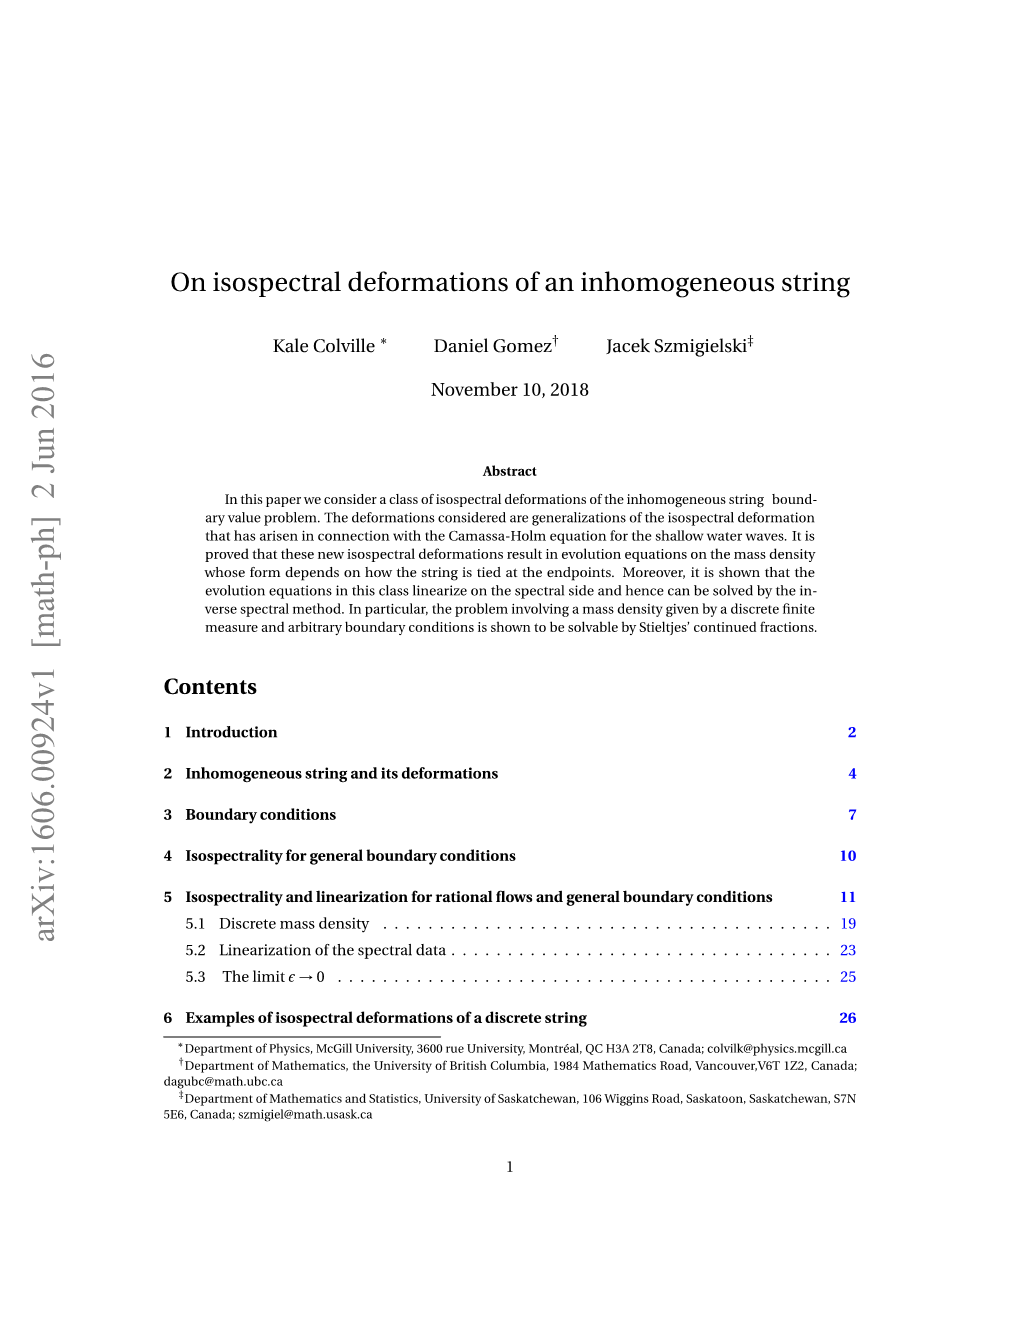 On Isospectral Deformations of an Inhomogeneous String